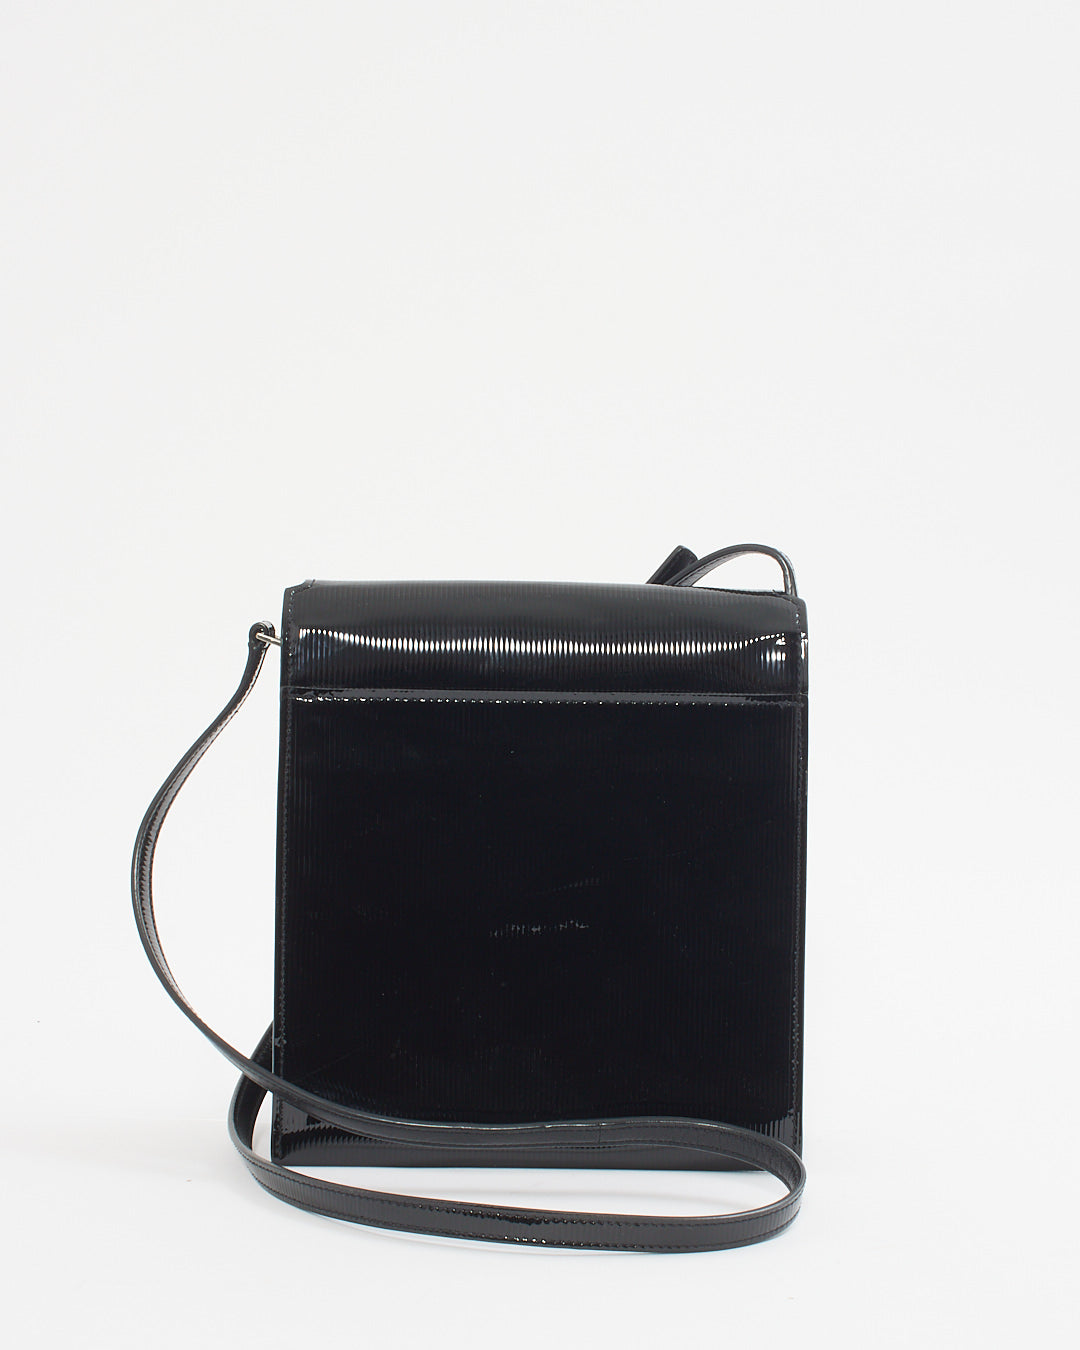 Saint Laurent Black Patent Leather Stripe Embossed Square Crossbody Bag